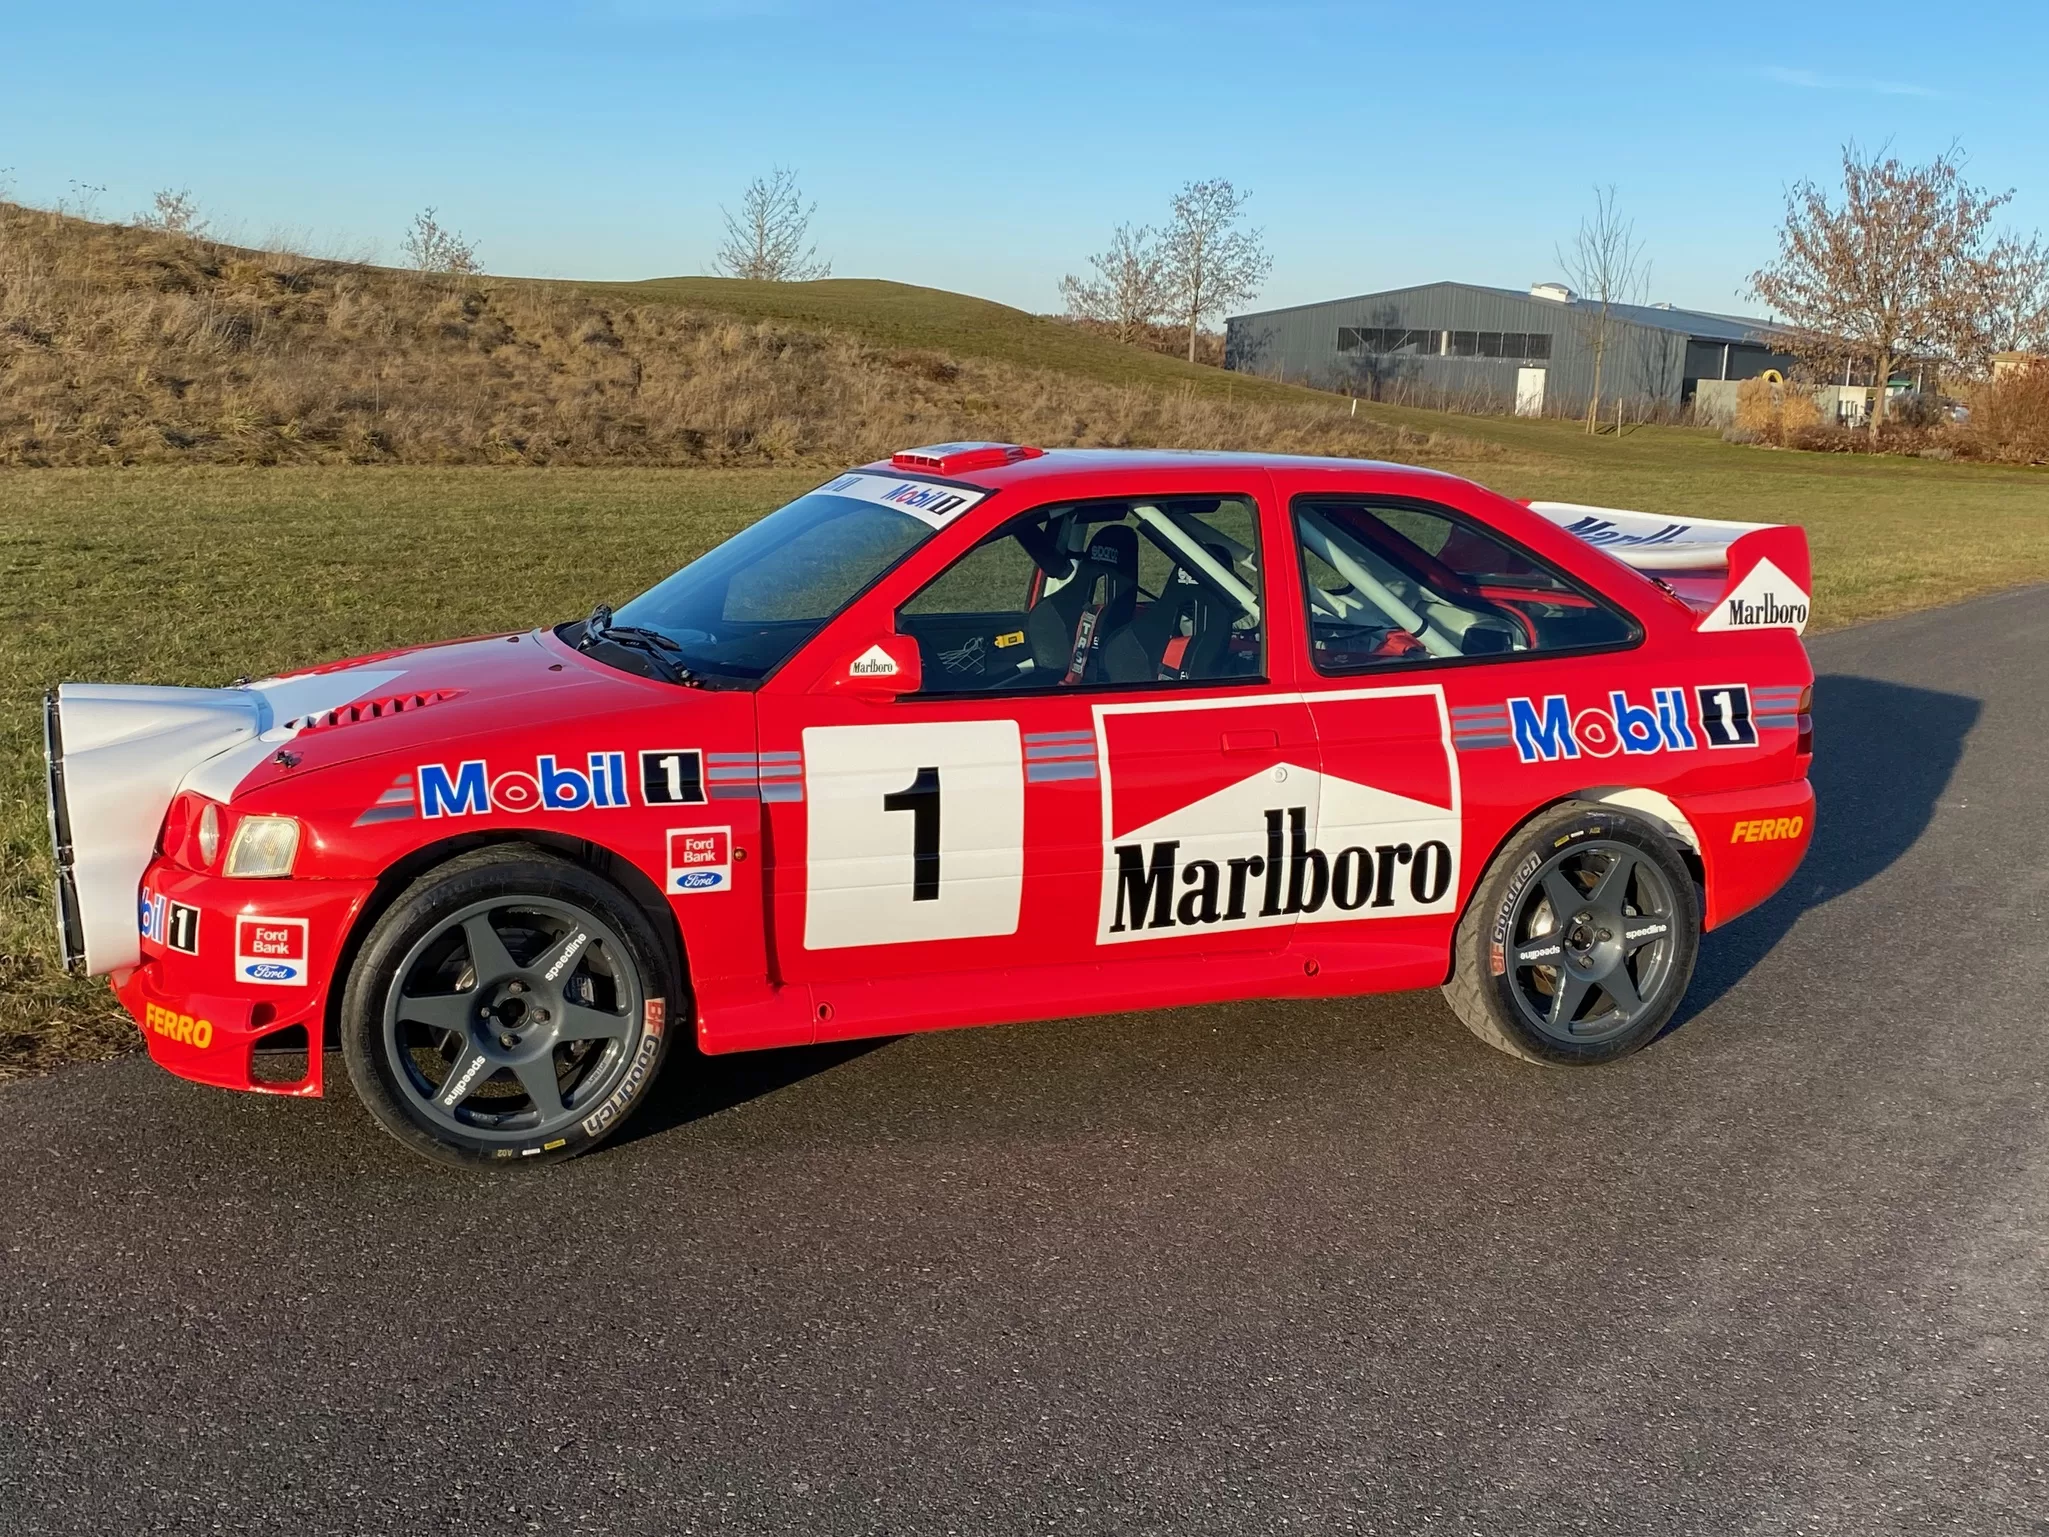 Marlboro Rally Cars’ Iconic Sponsored插图6